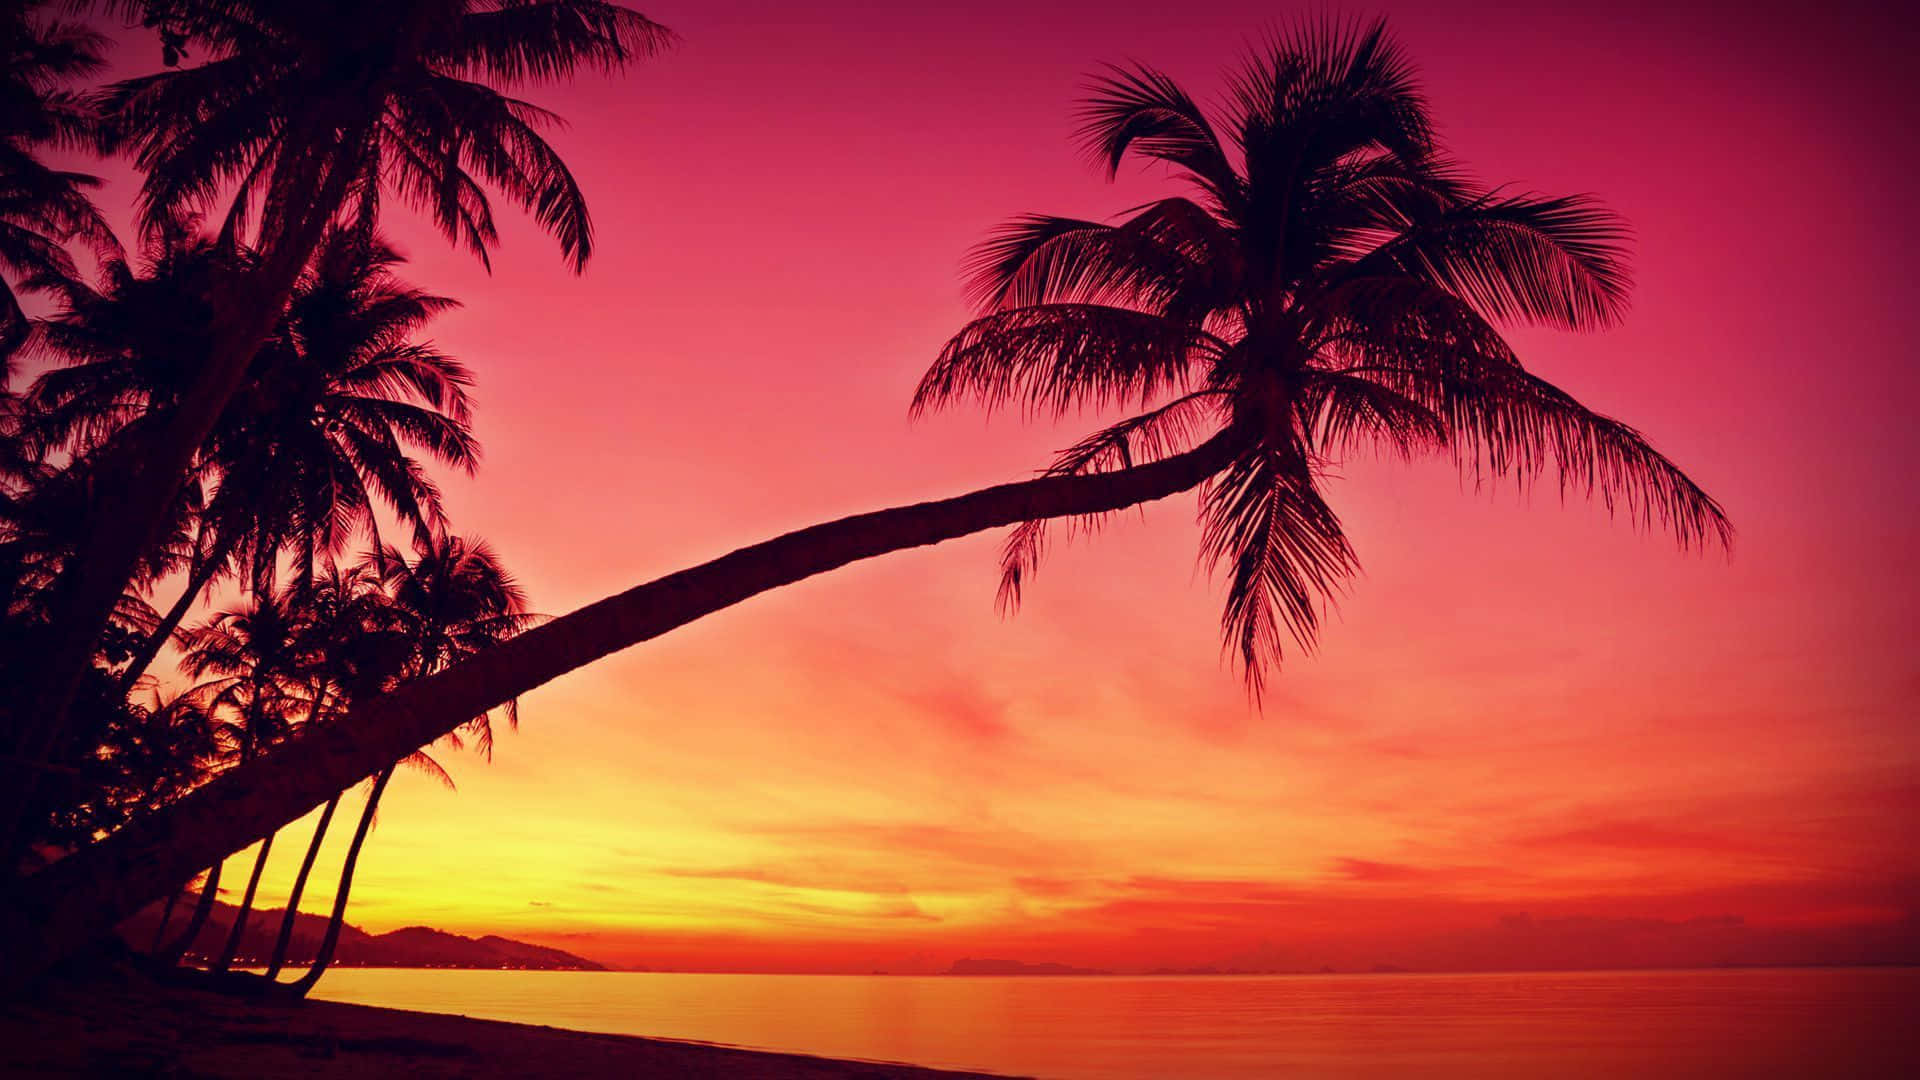 Enjoy the beautiful view of a beach sunset.